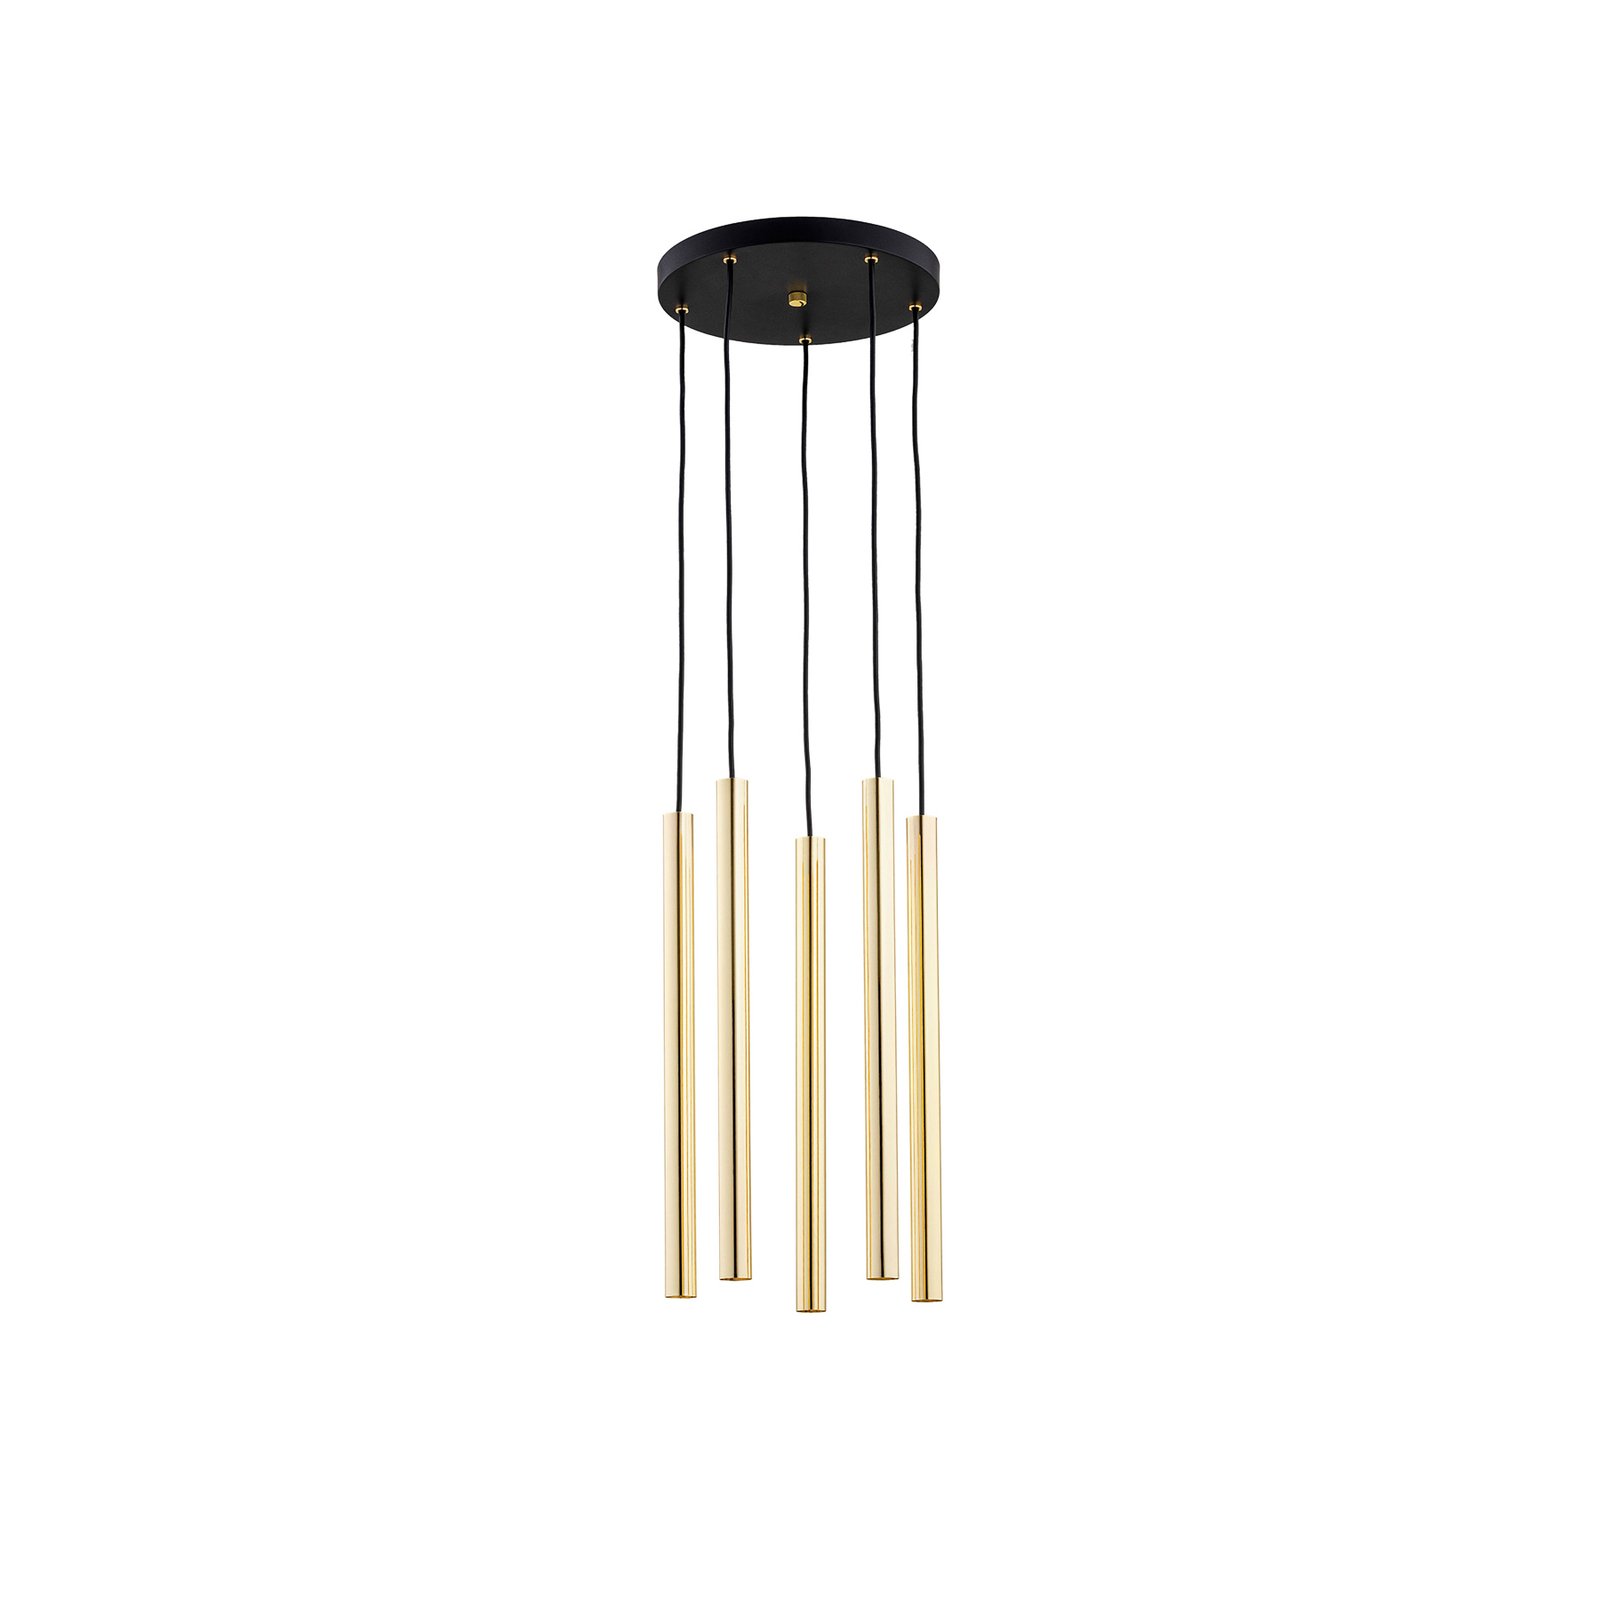 Sone pendant light, round canopy, 5-bulb, brass